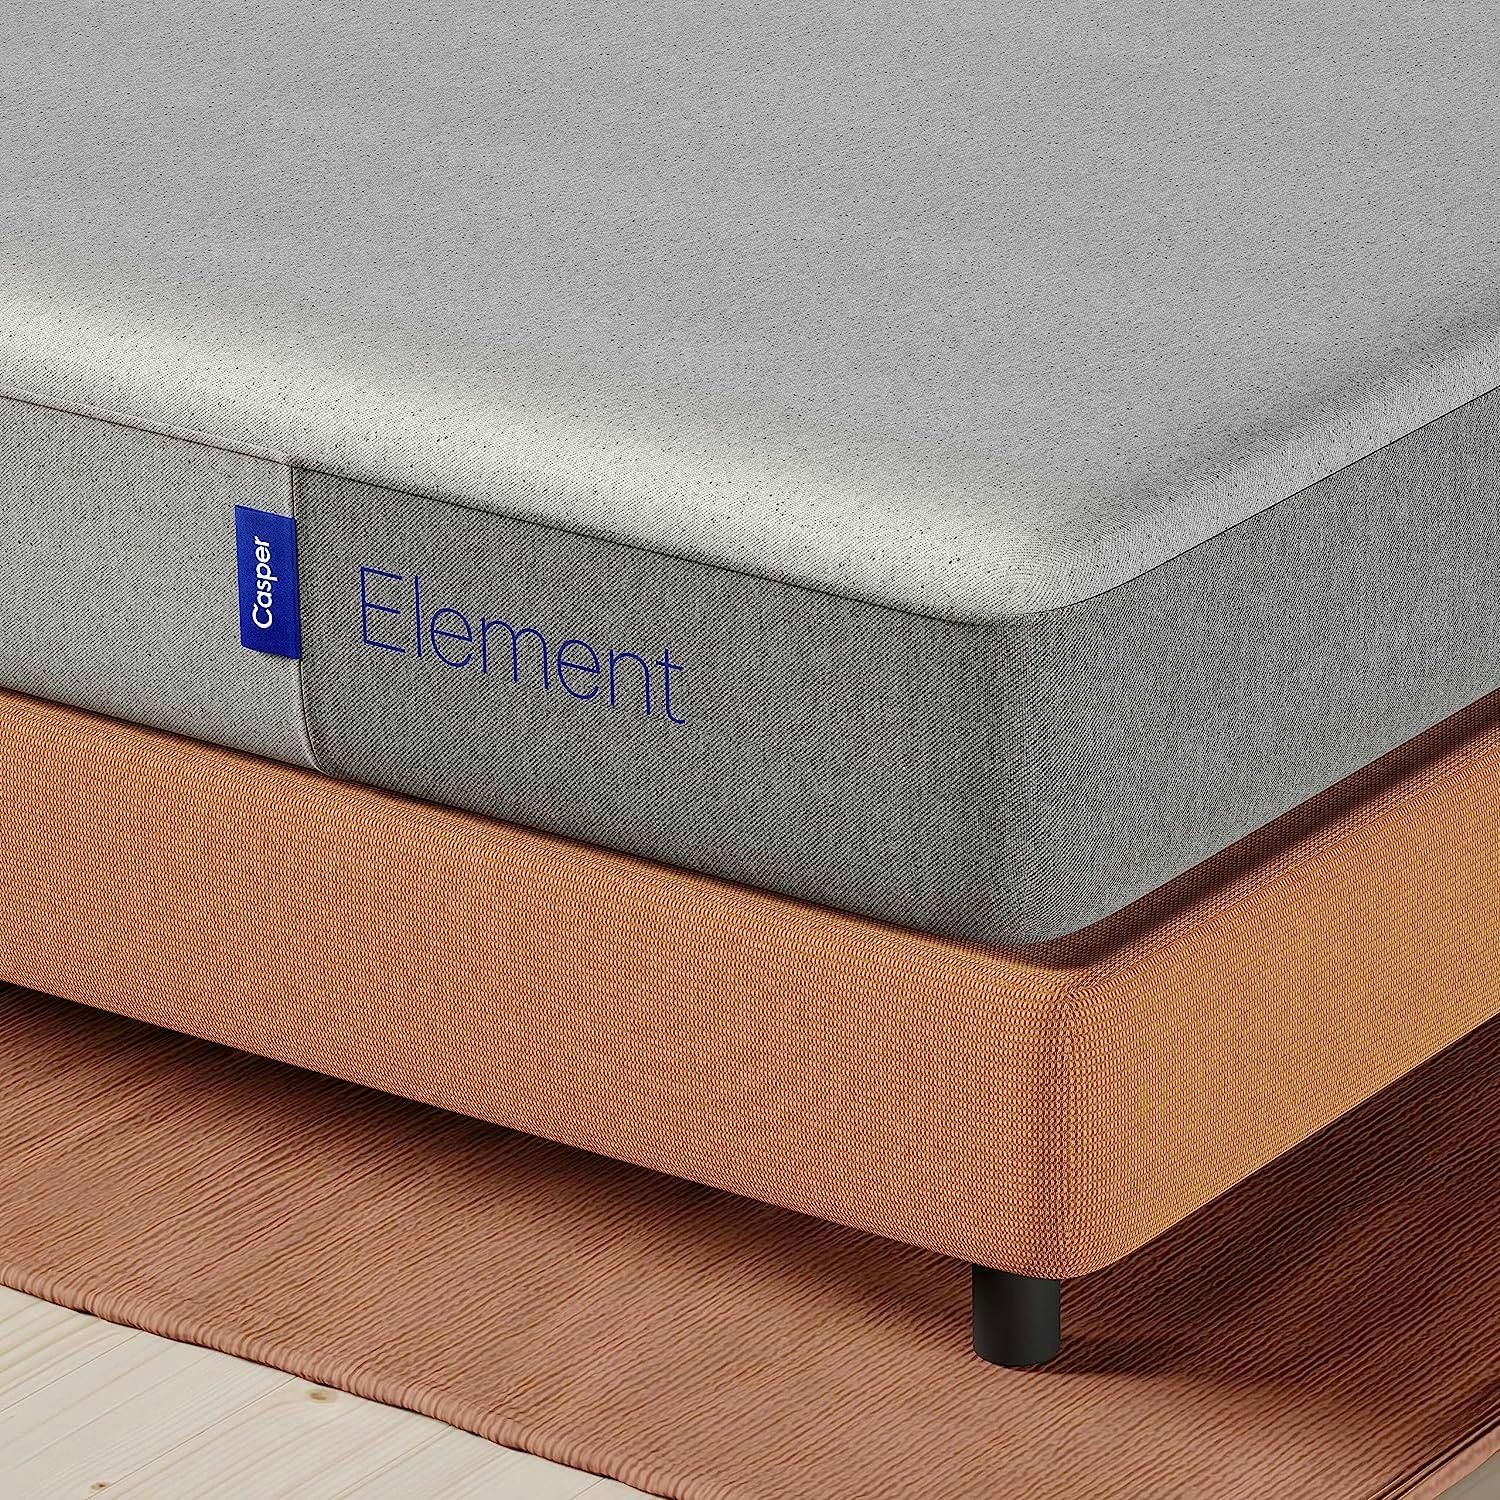 Casper Element Full-Size Grey Memory Foam Mattress with AirScape Technology